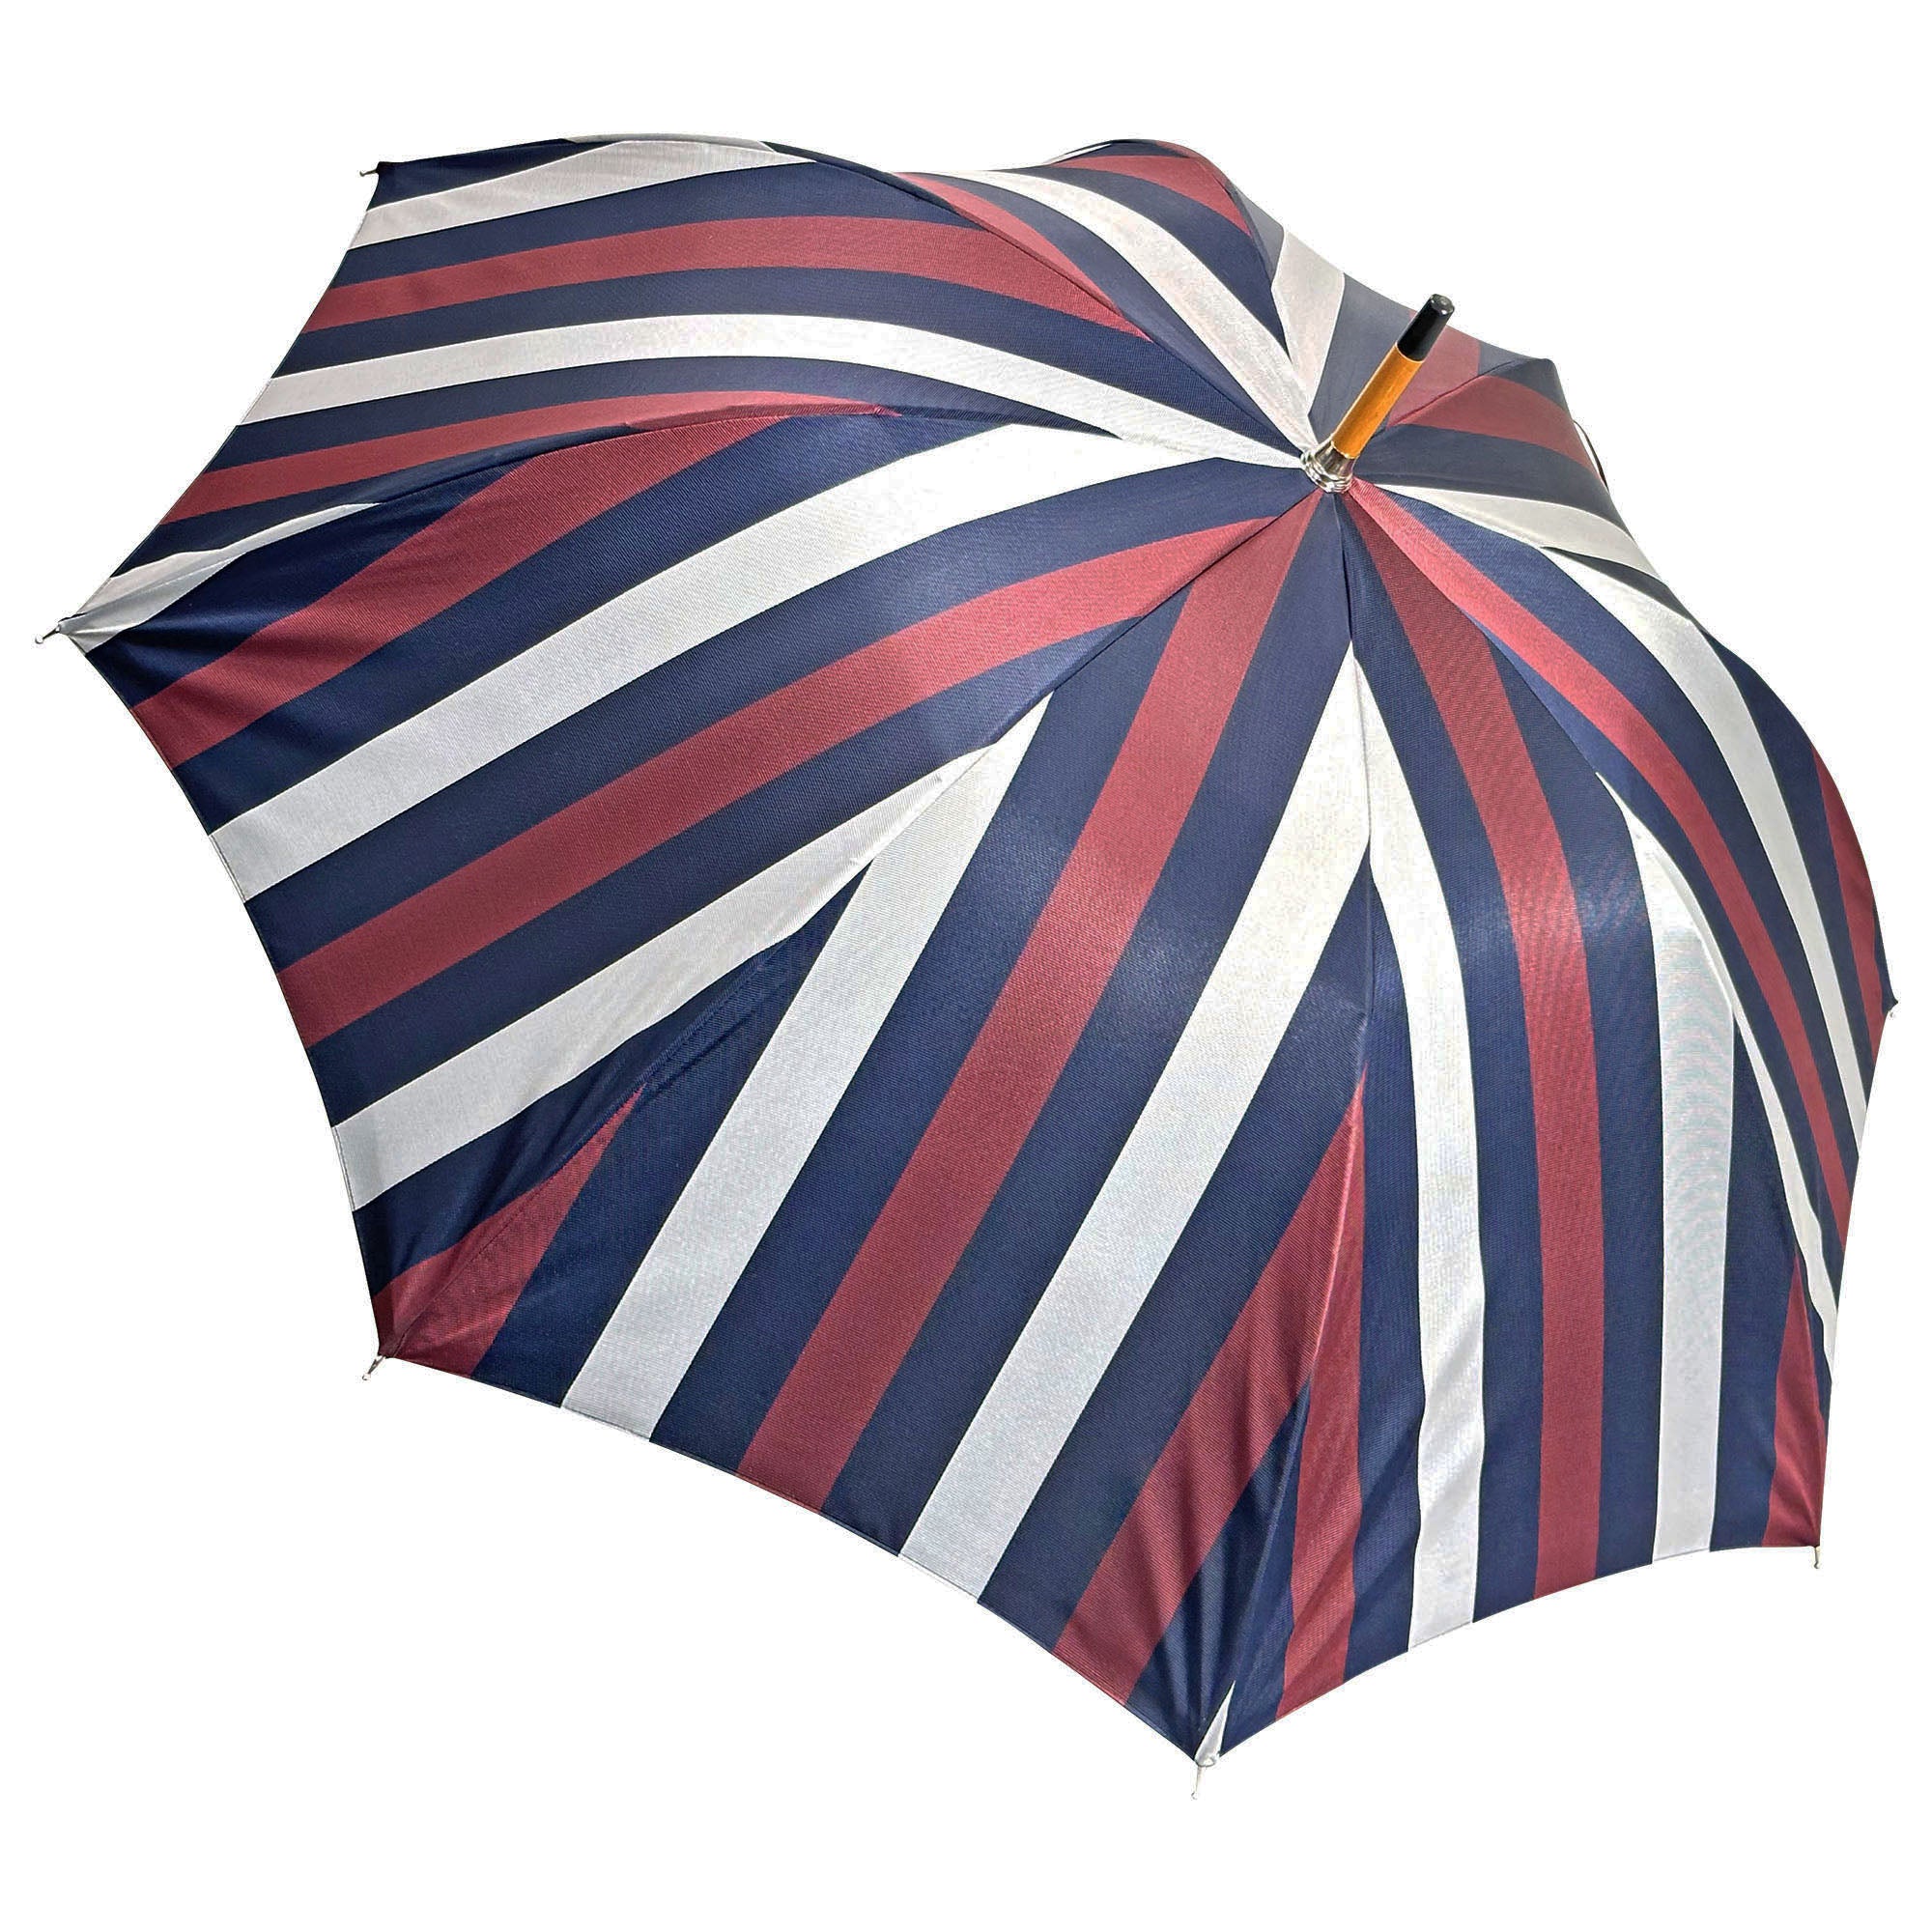 Double Cloth Men's Umbrella - Grey and Striped Design